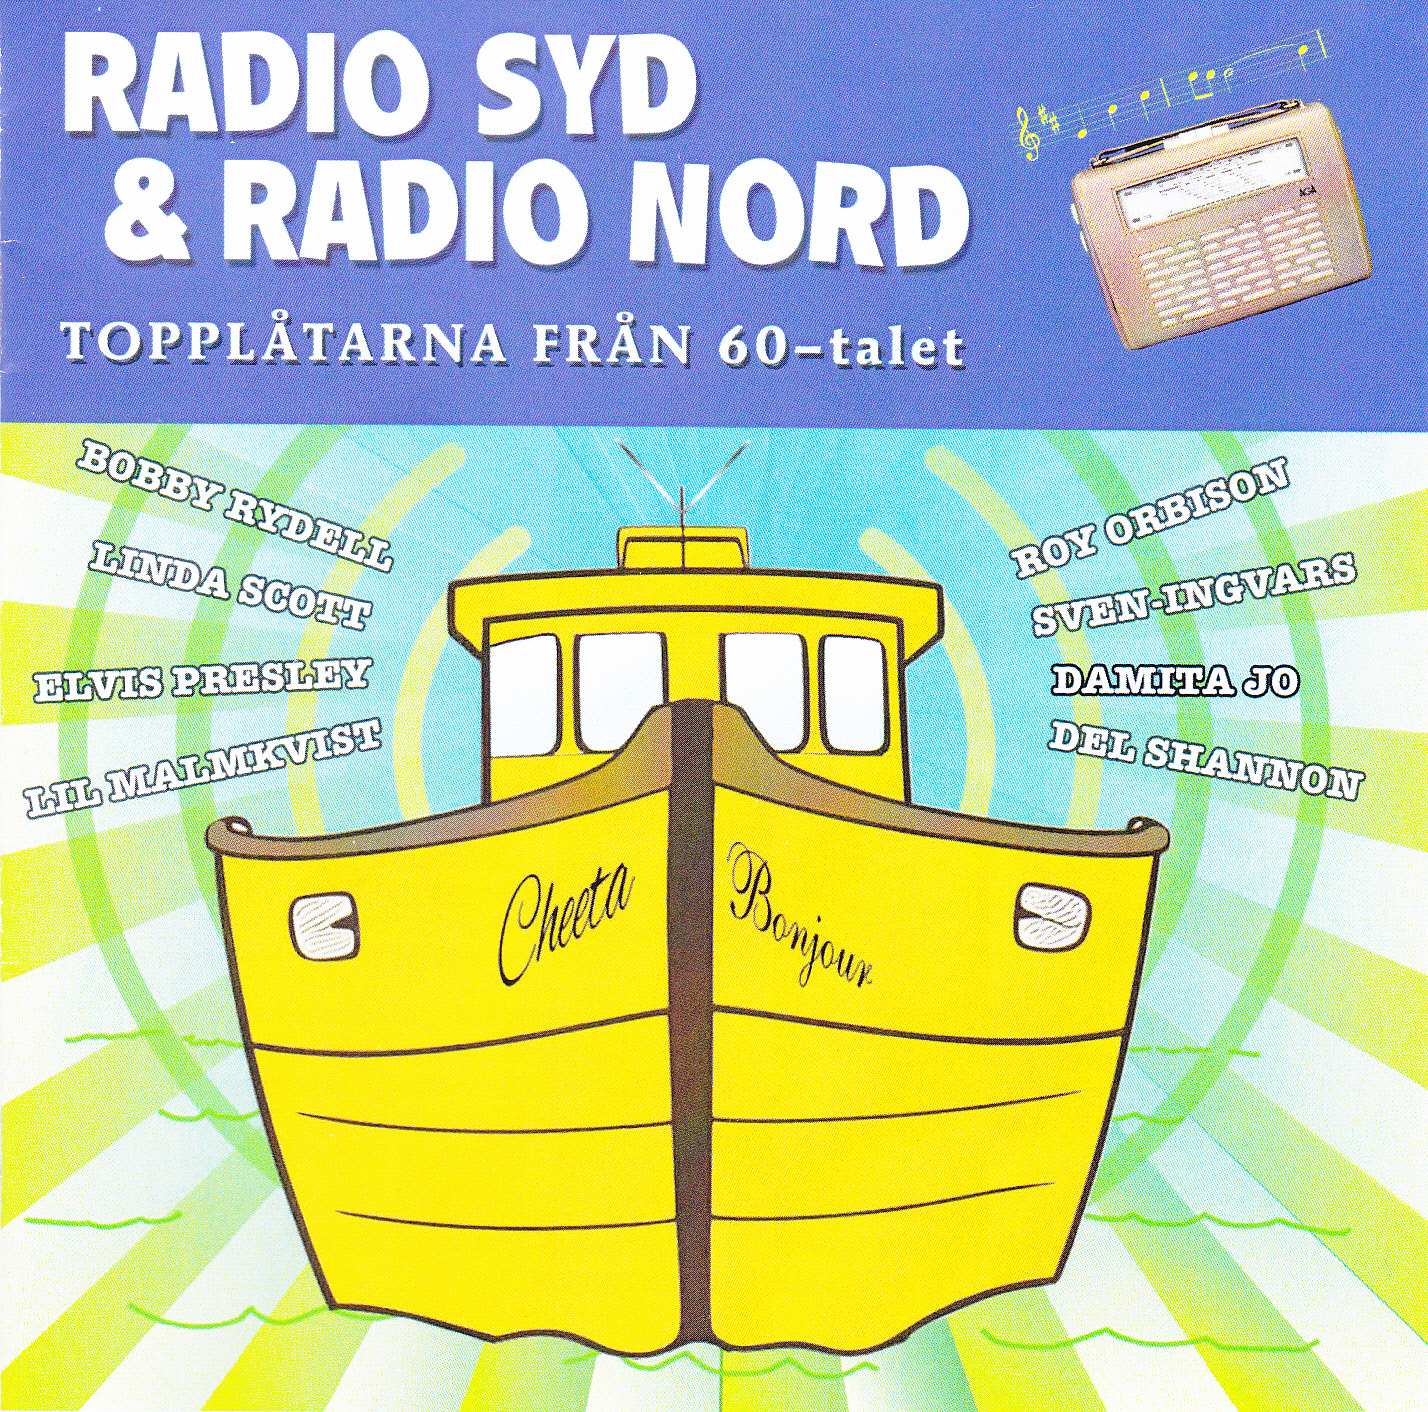 RADIO SYD & RADIO NORD